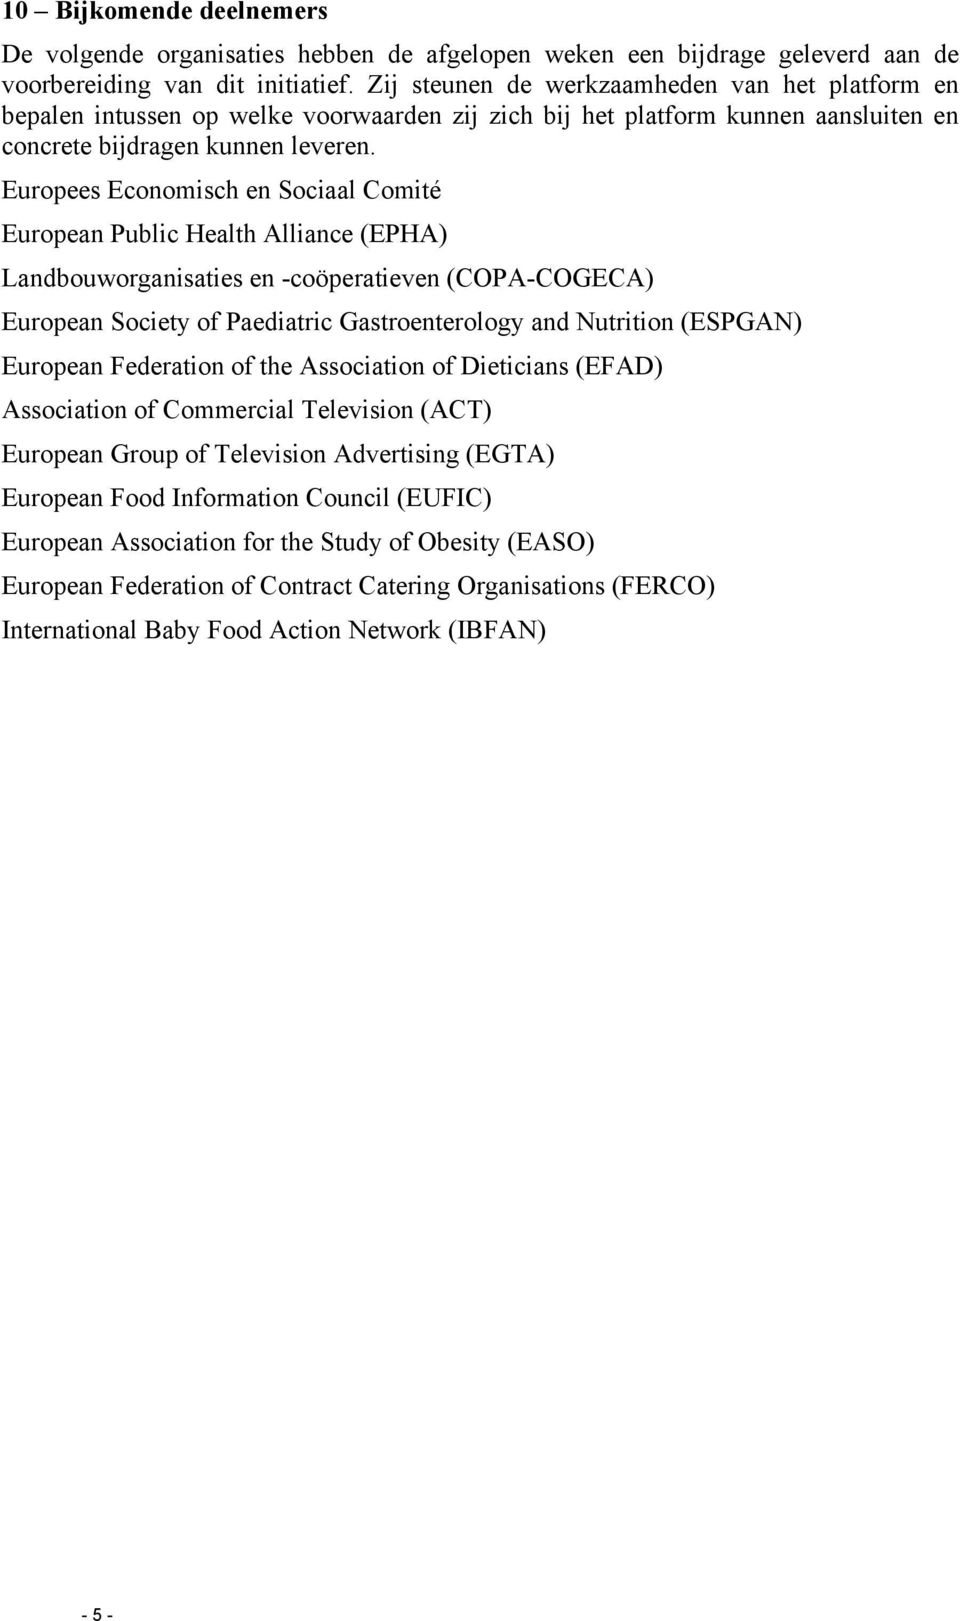 Europees Economisch en Sociaal Comité European Public Health Alliance (EPHA) Landbouworganisaties en -coöperatieven (COPA-COGECA) European Society of Paediatric Gastroenterology and Nutrition